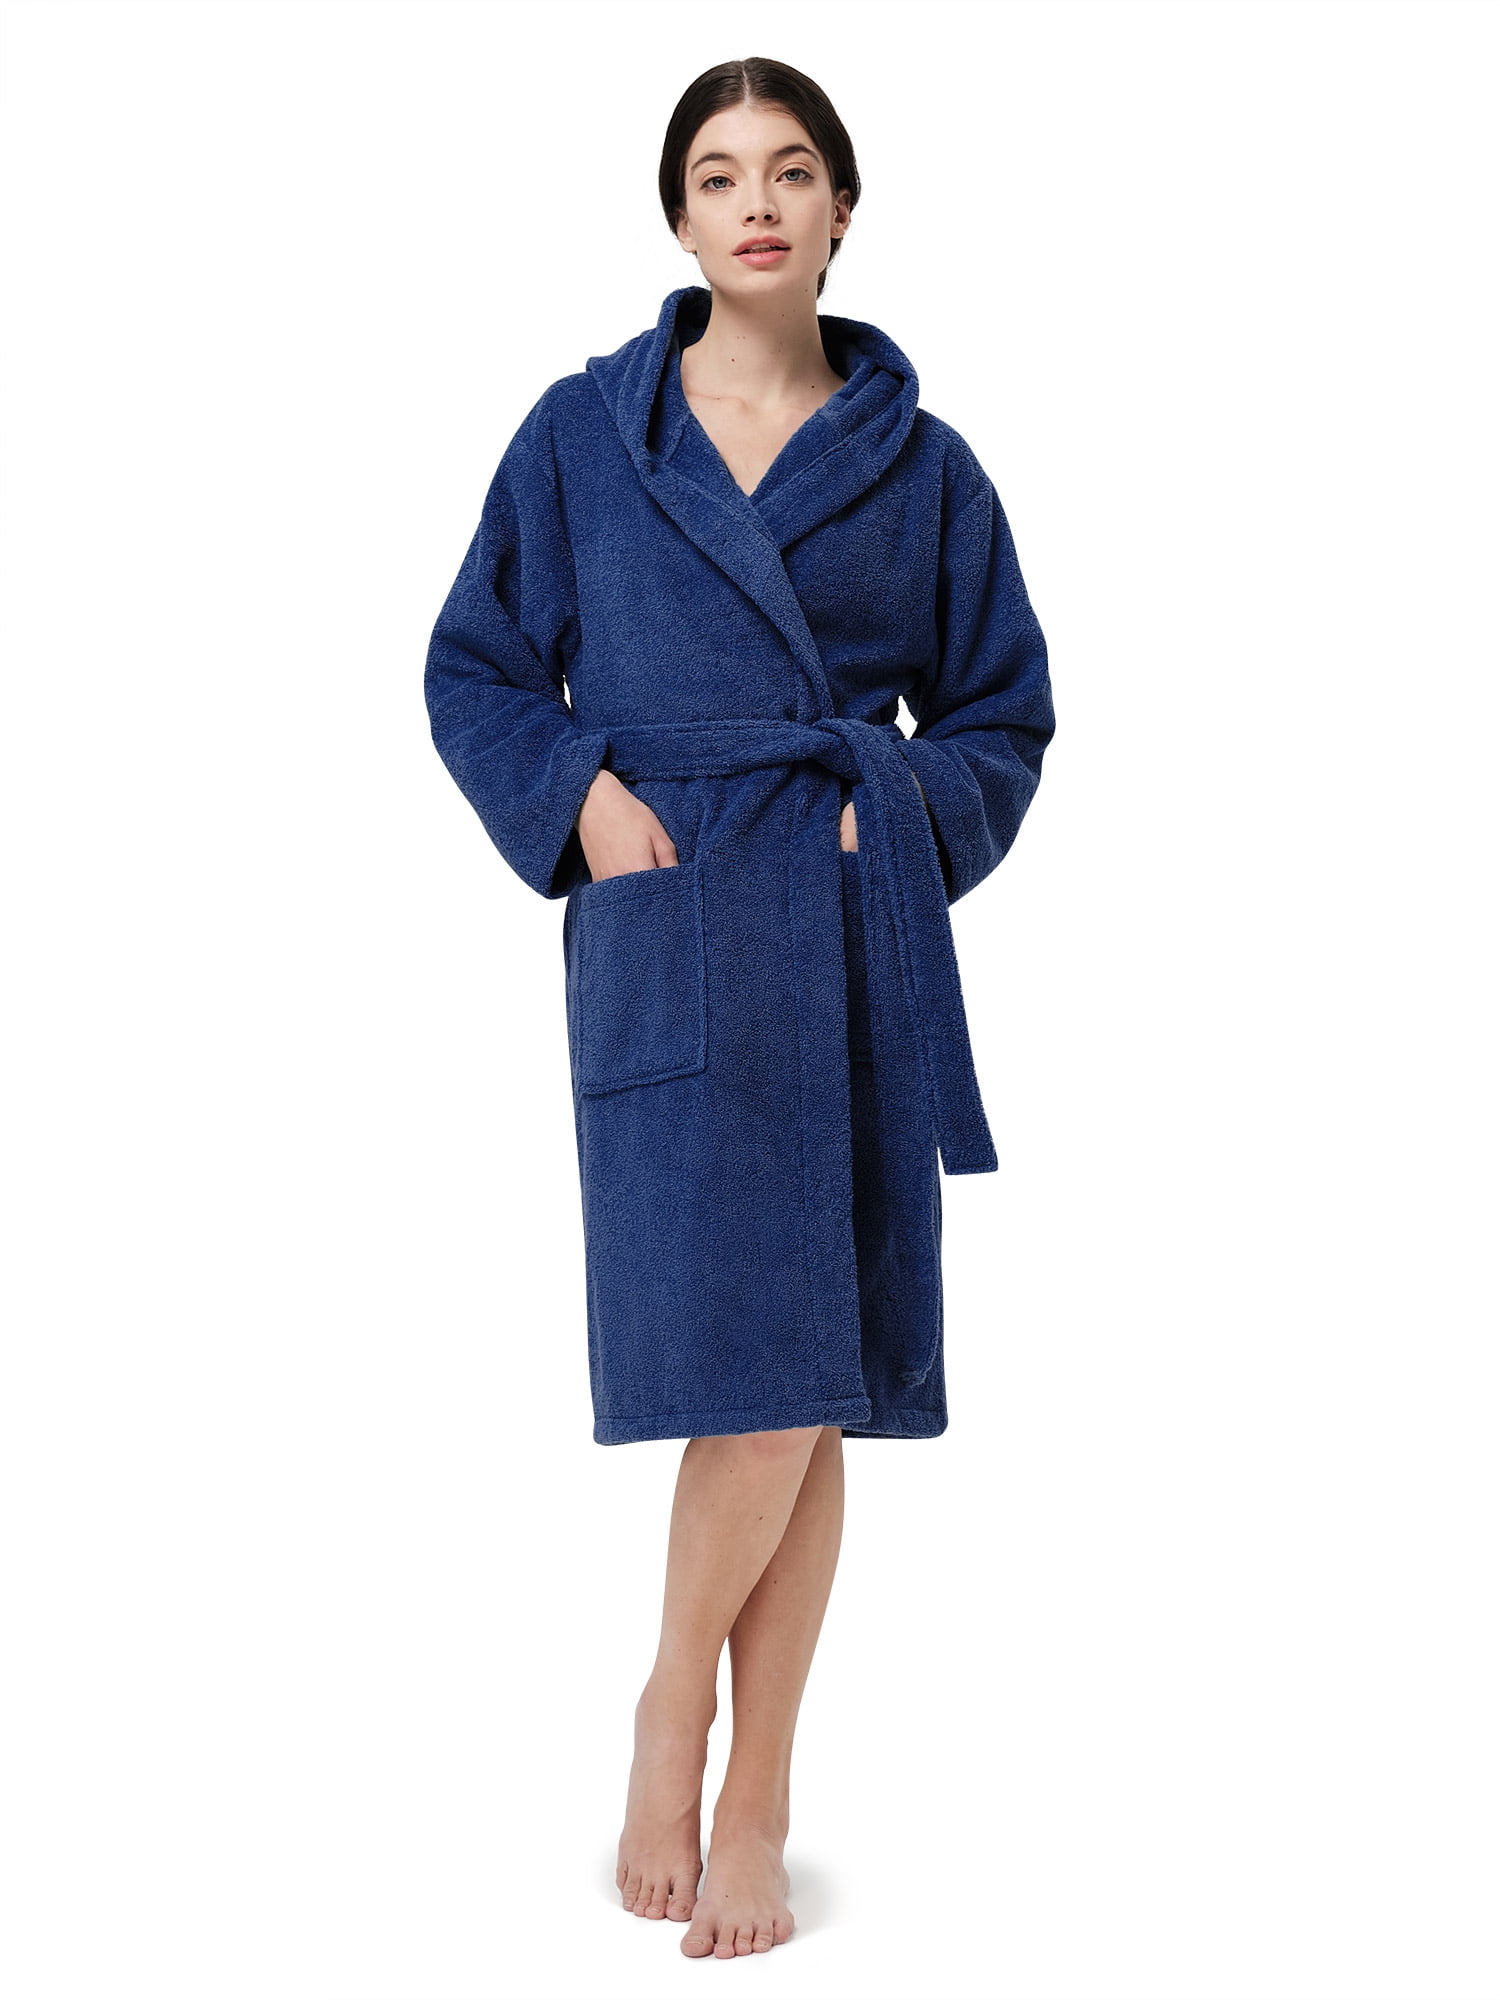 SIORO Womens Terry Cloth Robe Hooded Towel Long Bathrobe Cotton Soft Shower Housecoat for Spa Hot Tub Sauna Pool 